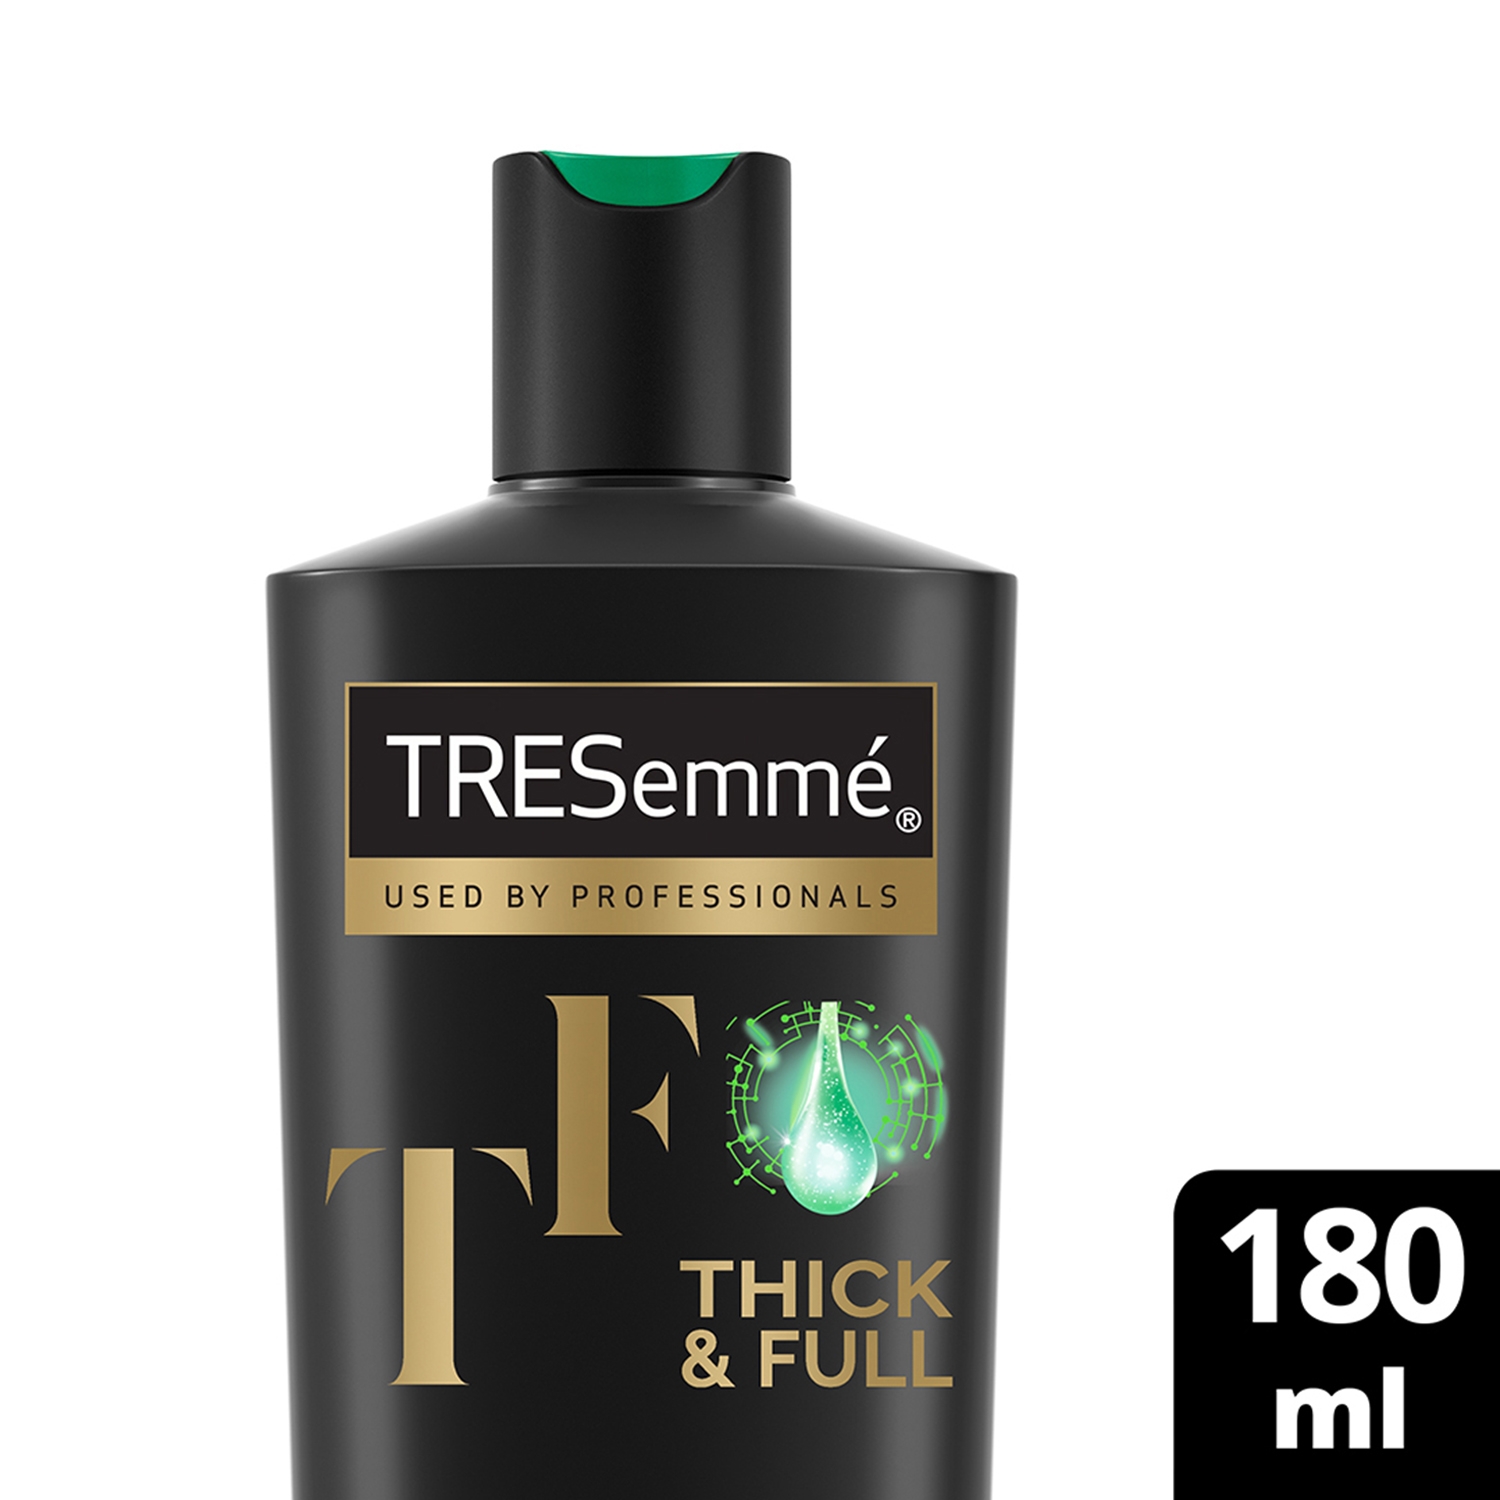 Tresemme Thick & Full Shampoo - (180ml)